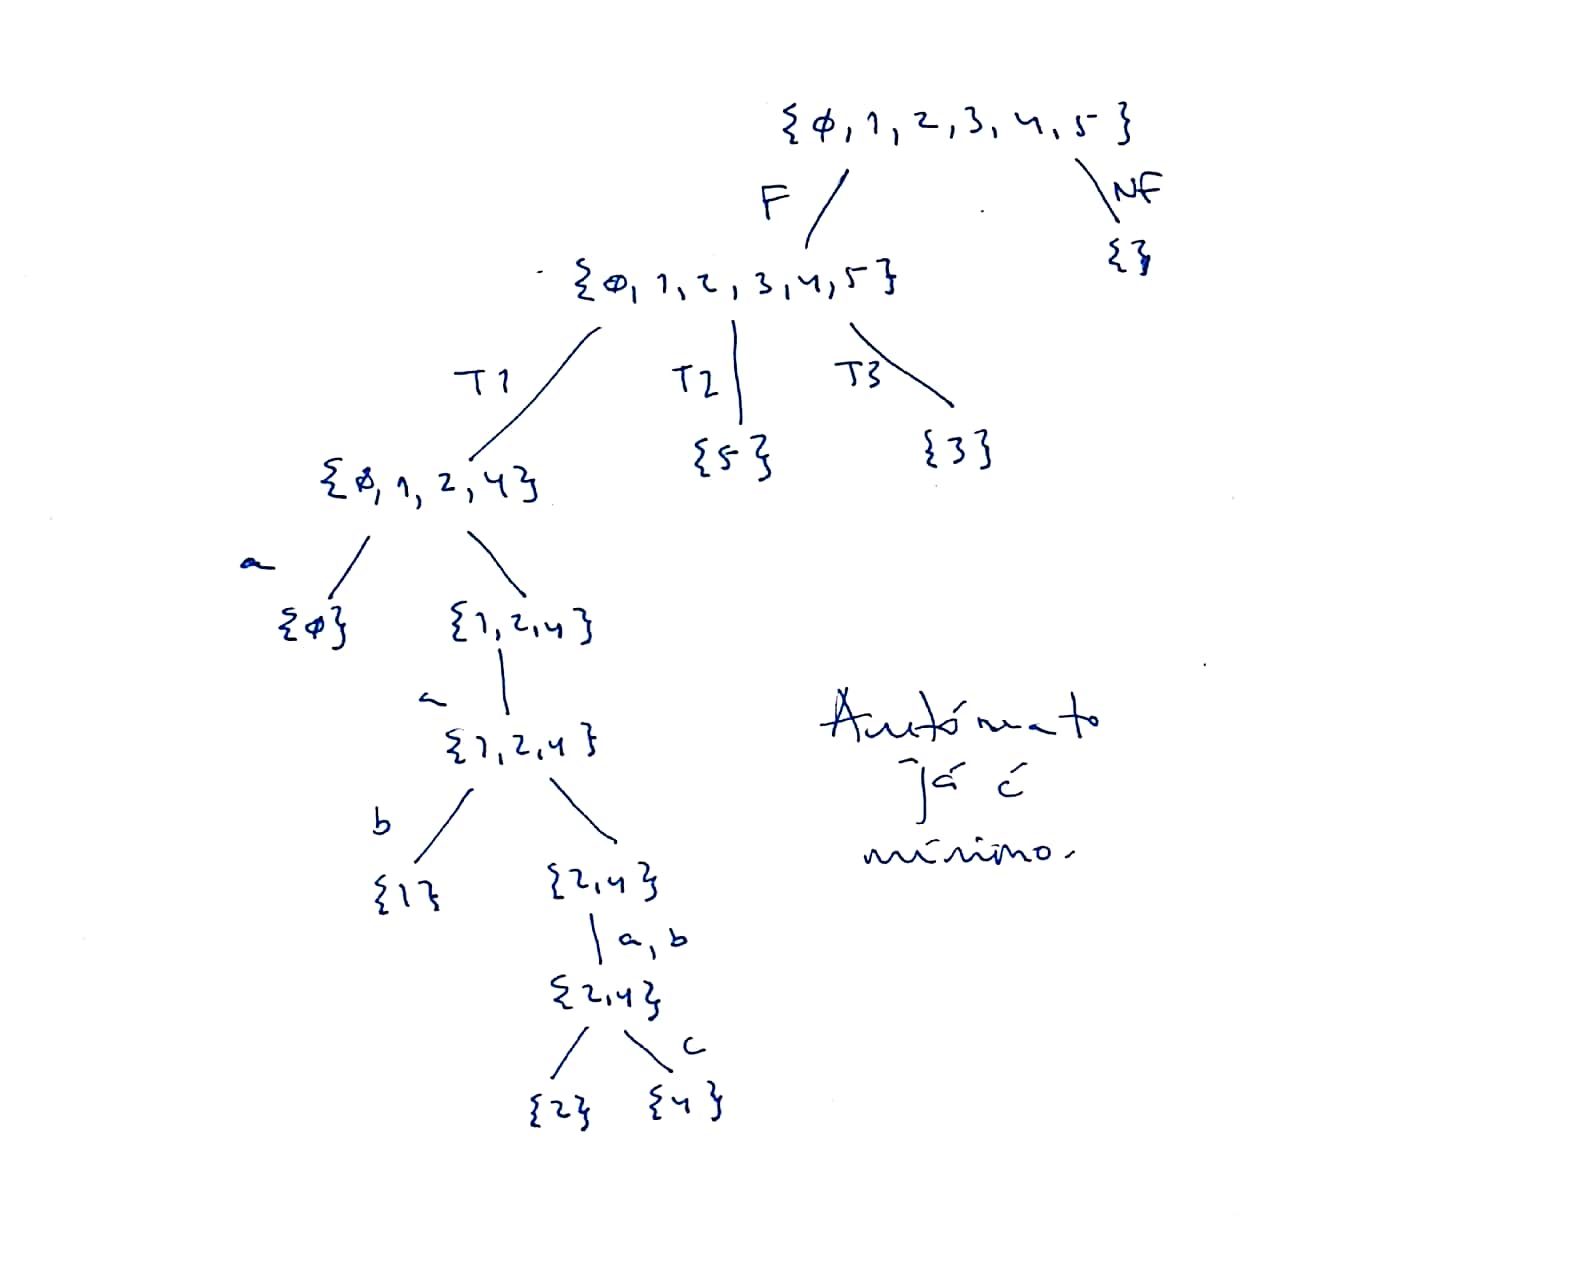 Solution-co-ex24-dfa-graph-min-tree-graph.jpg